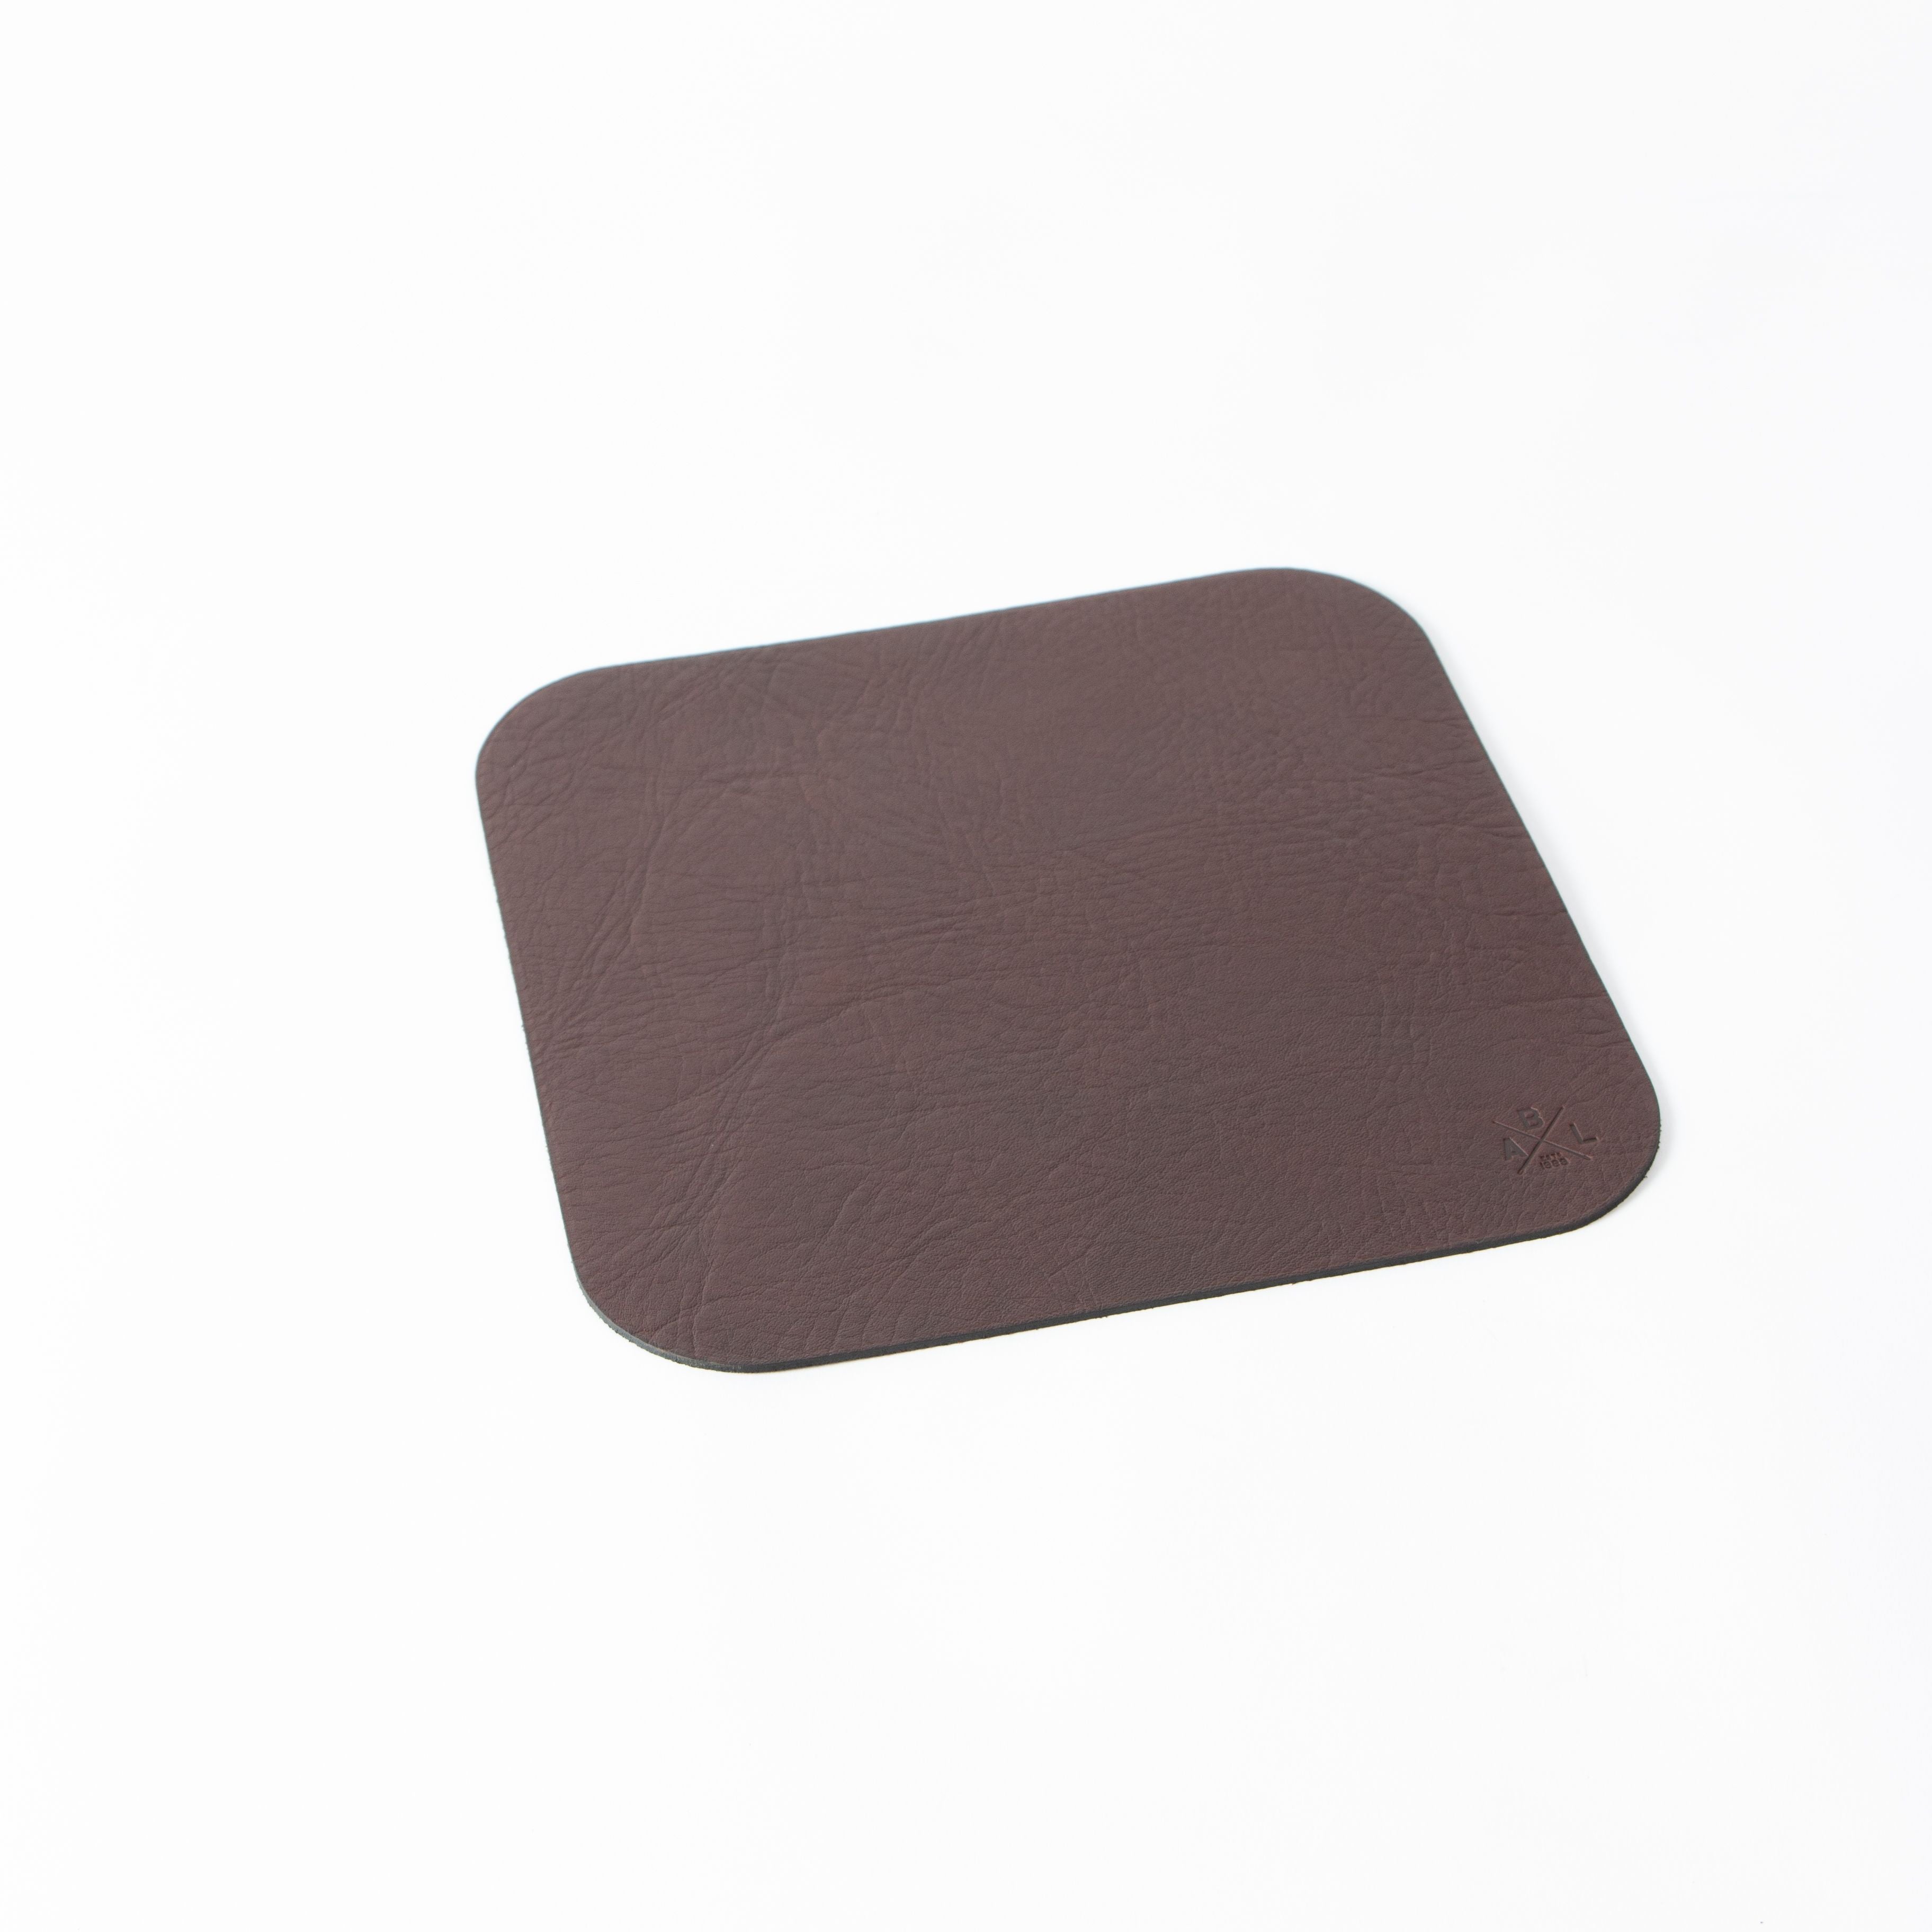 Premium Leather Mouse Pad